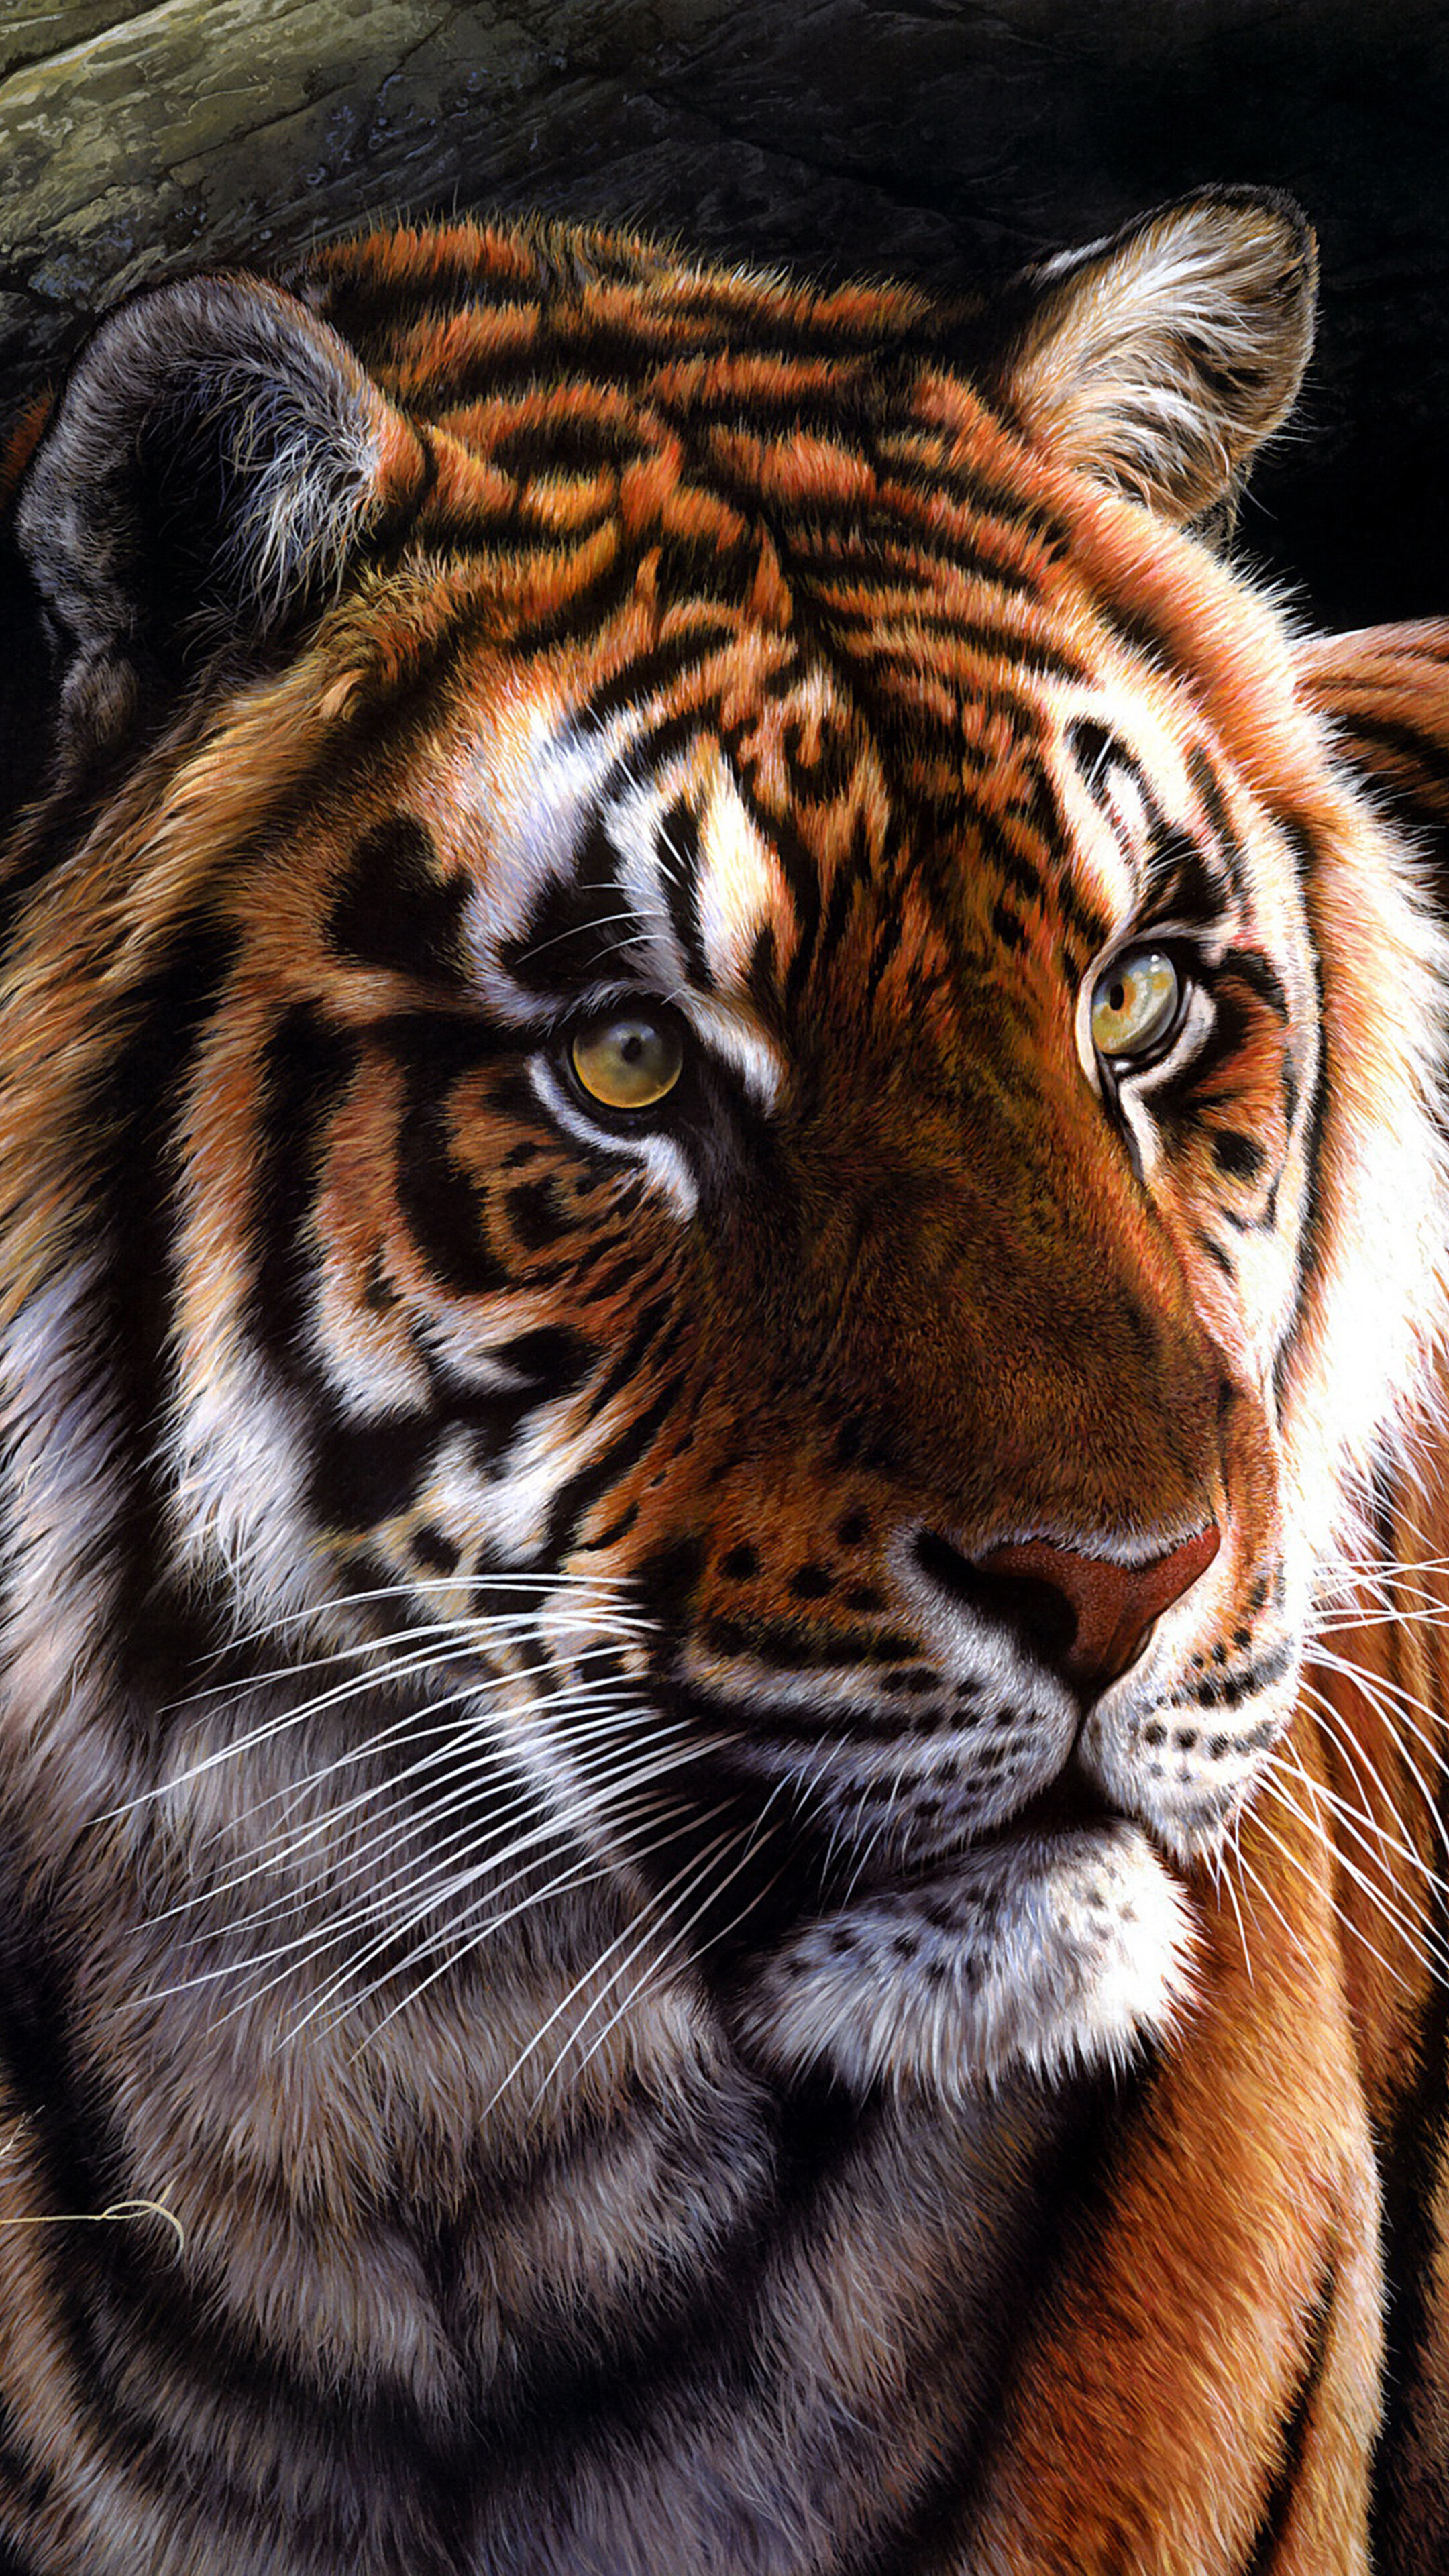 Bengal Tiger UHD 4K Wallpaper - Pixelz.cc